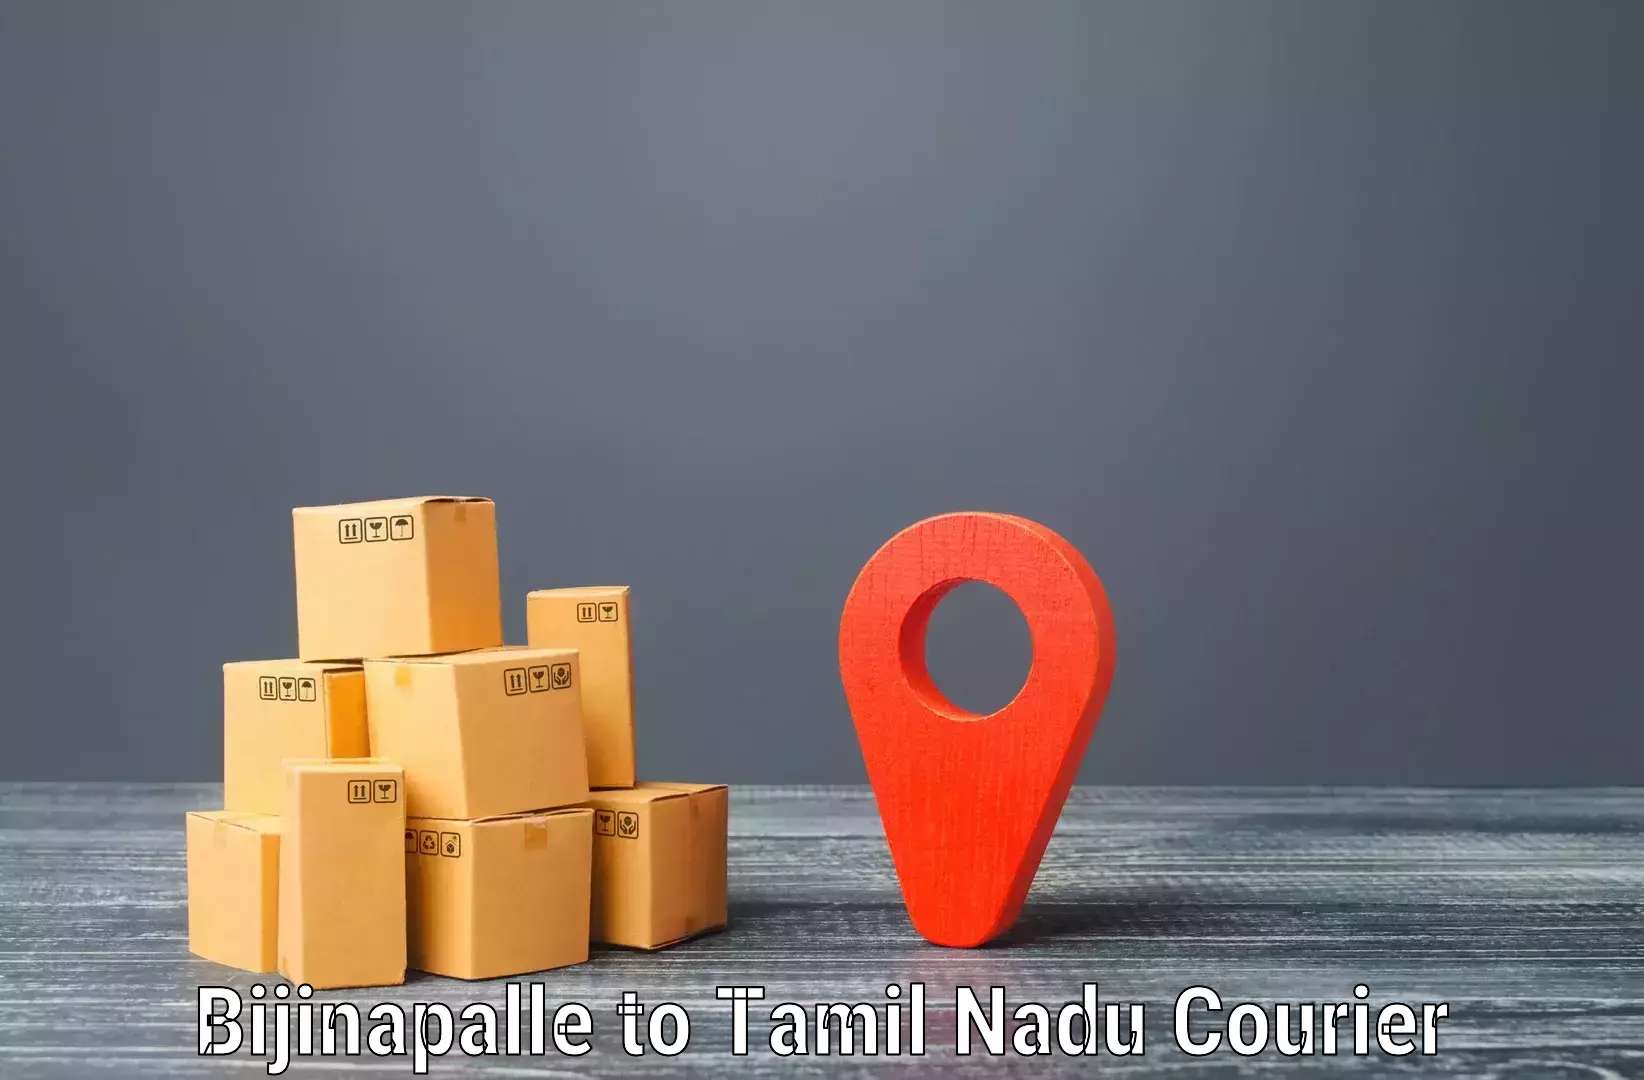 Courier services Bijinapalle to Madukkarai